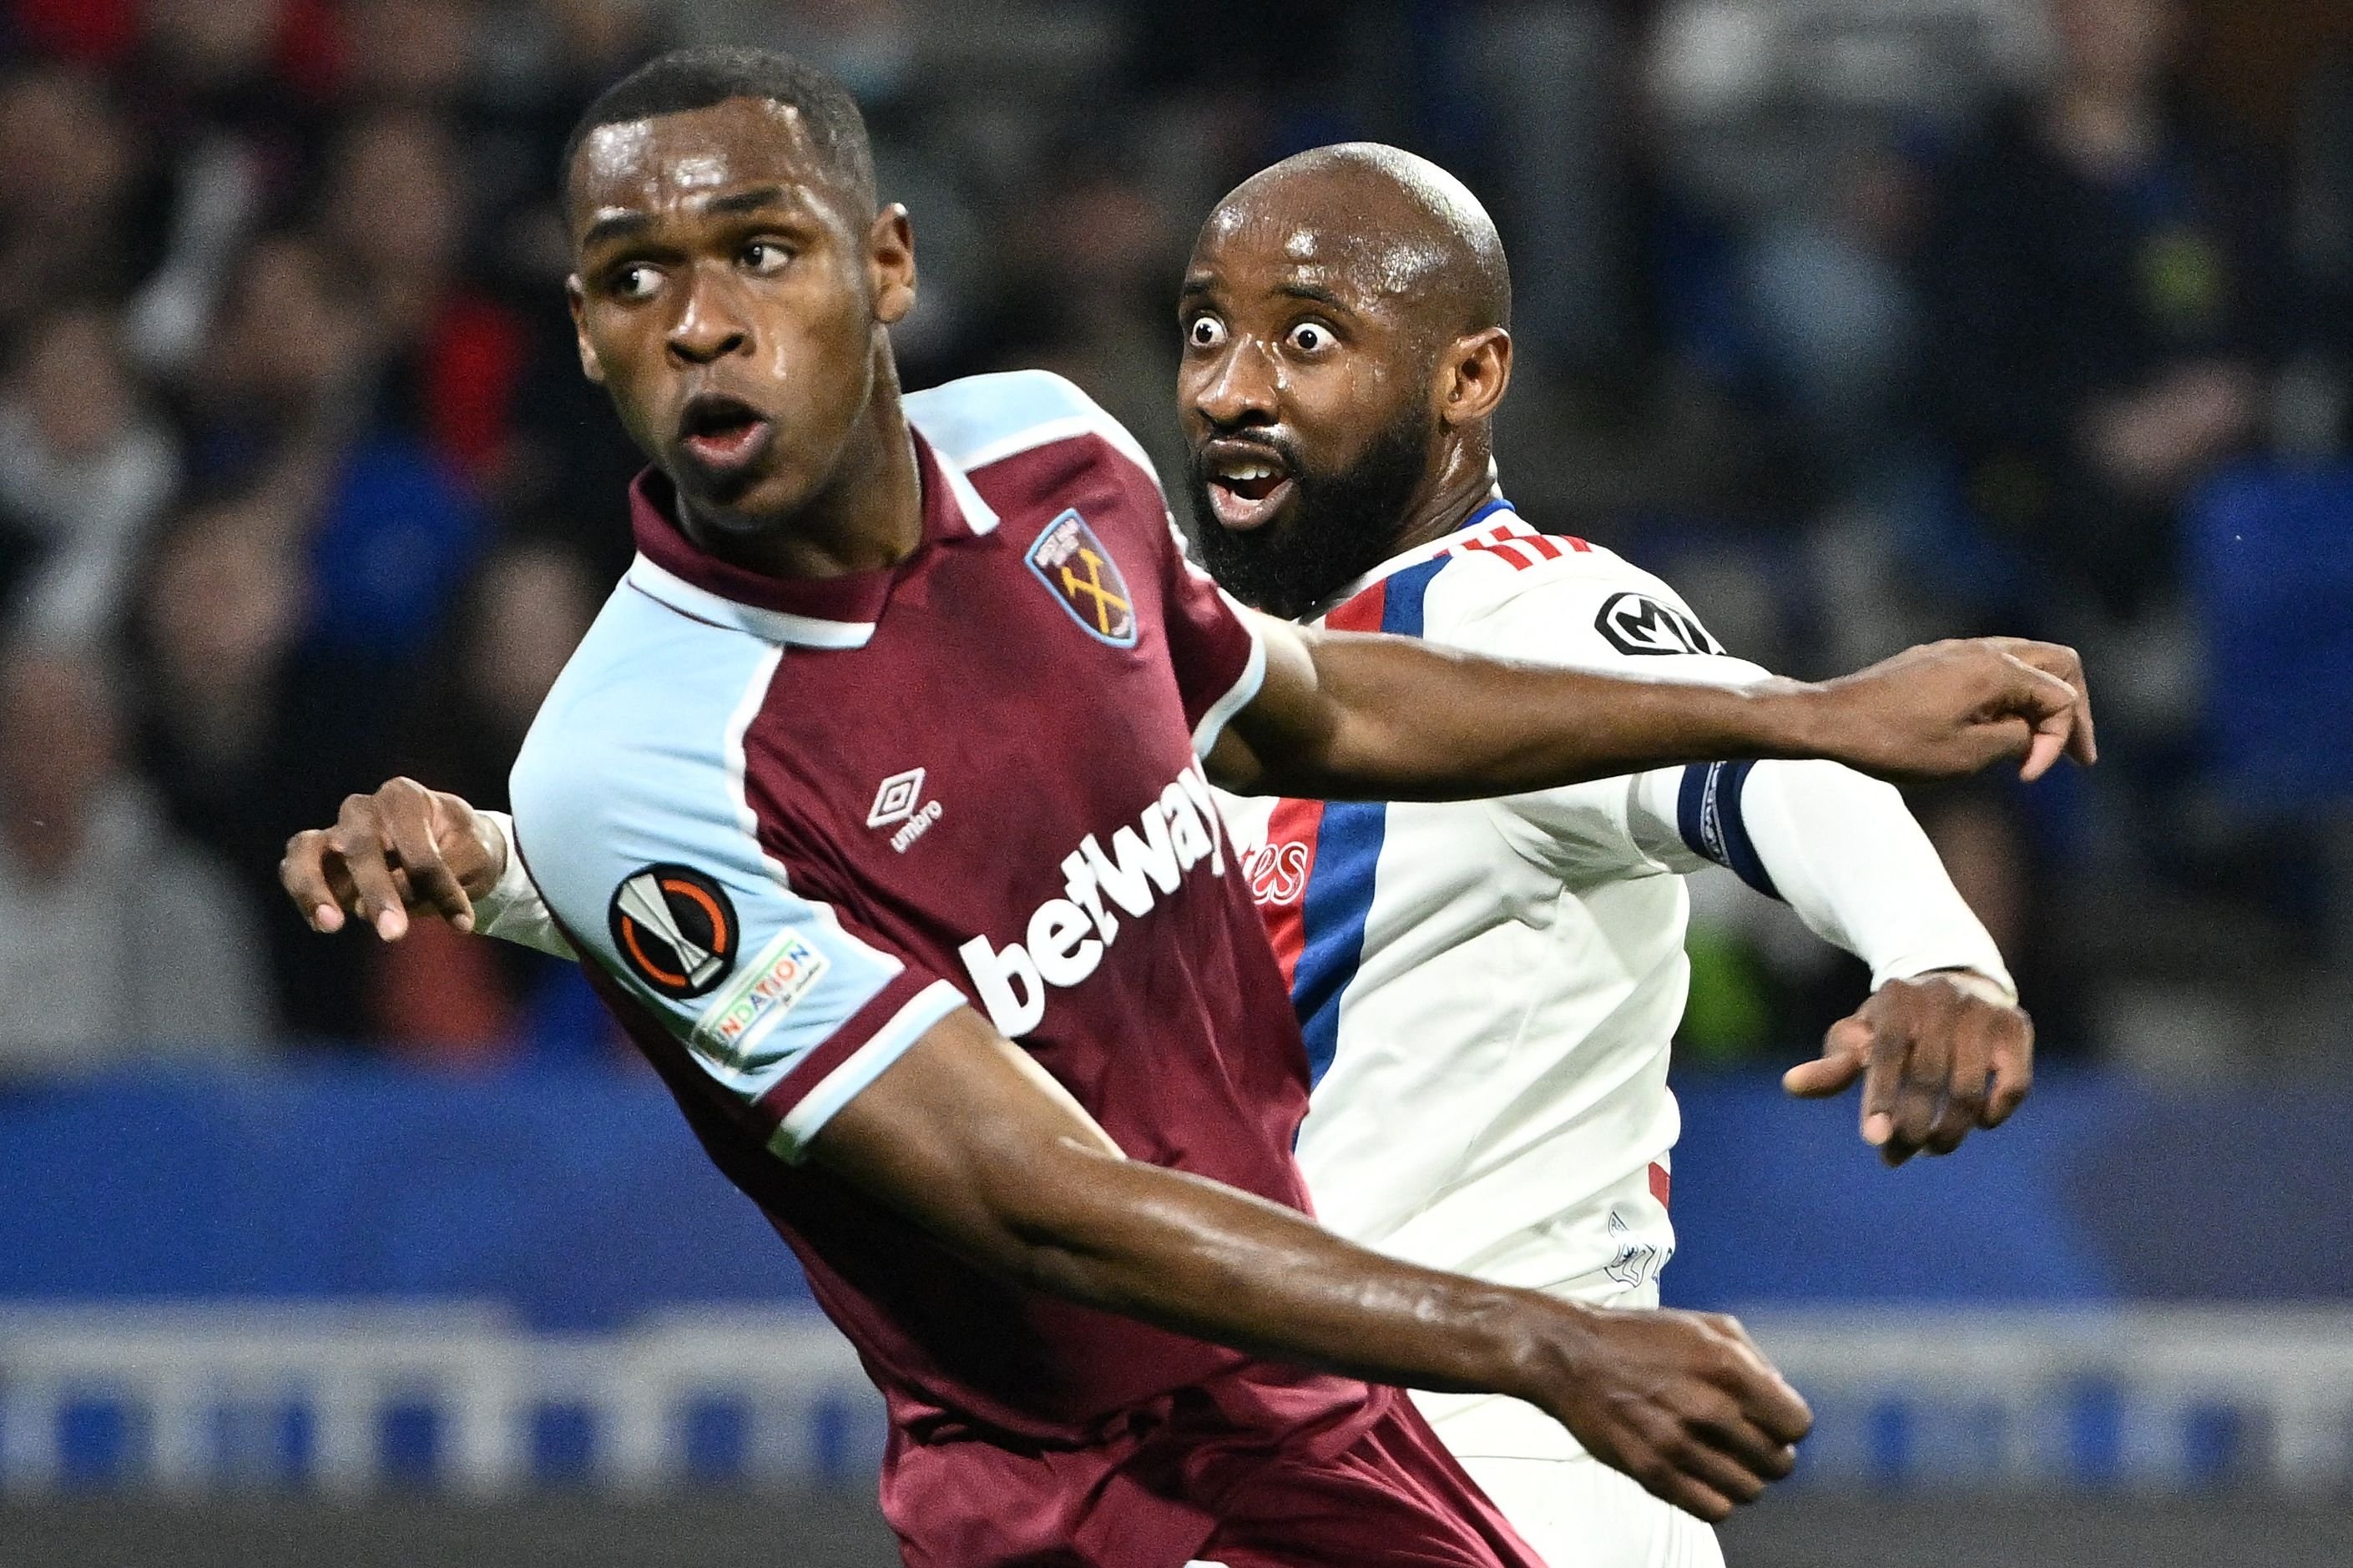 Reaksi pemain Lyon Moussa Dembele (kanan) dan pemain West Ham Issa Diop pada pertandingan leg kedua perempat final Liga Europa, Lyon, Prancis, 14 April 2022. (AFP Photo)